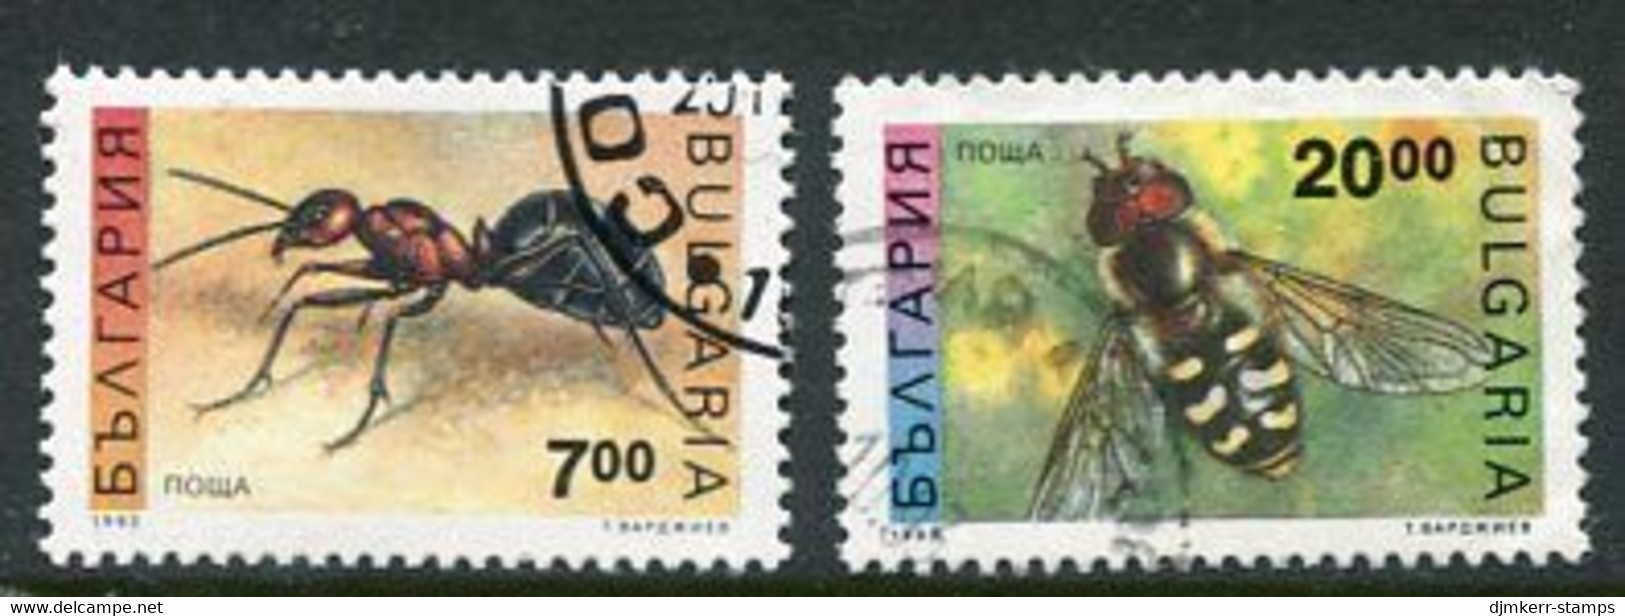 BULGARIA 1992 Insect Definitive 7, 20 L. Used.  Michel 3998-99 - Gebruikt